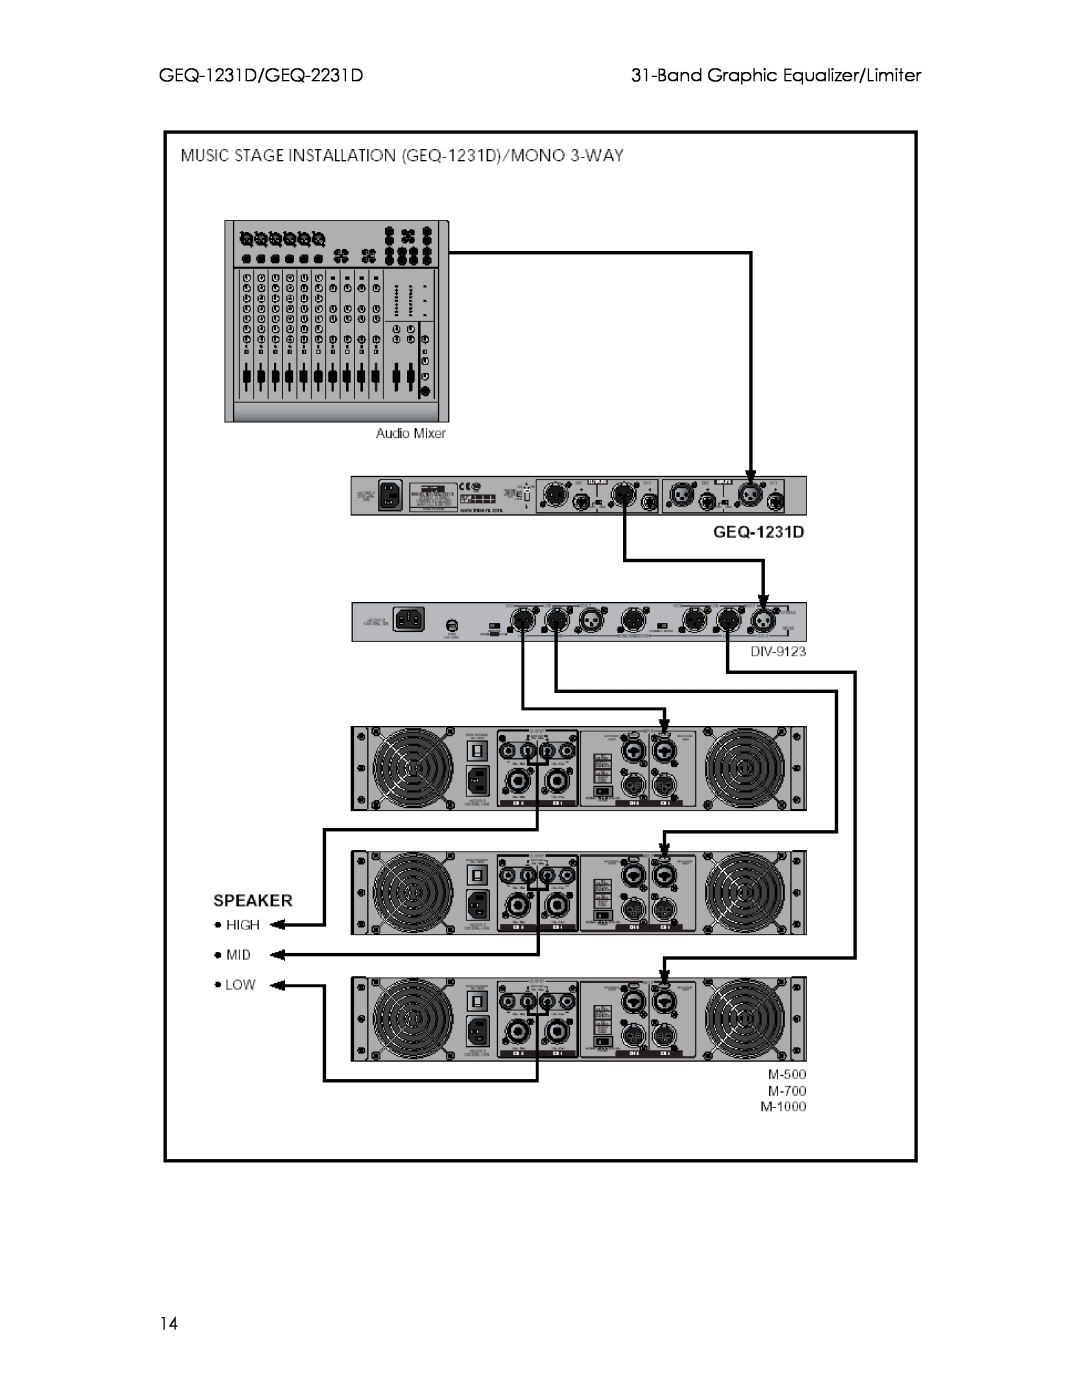 Intermec manual GEQ-1231D/GEQ-2231D, BandGraphic Equalizer/Limiter 